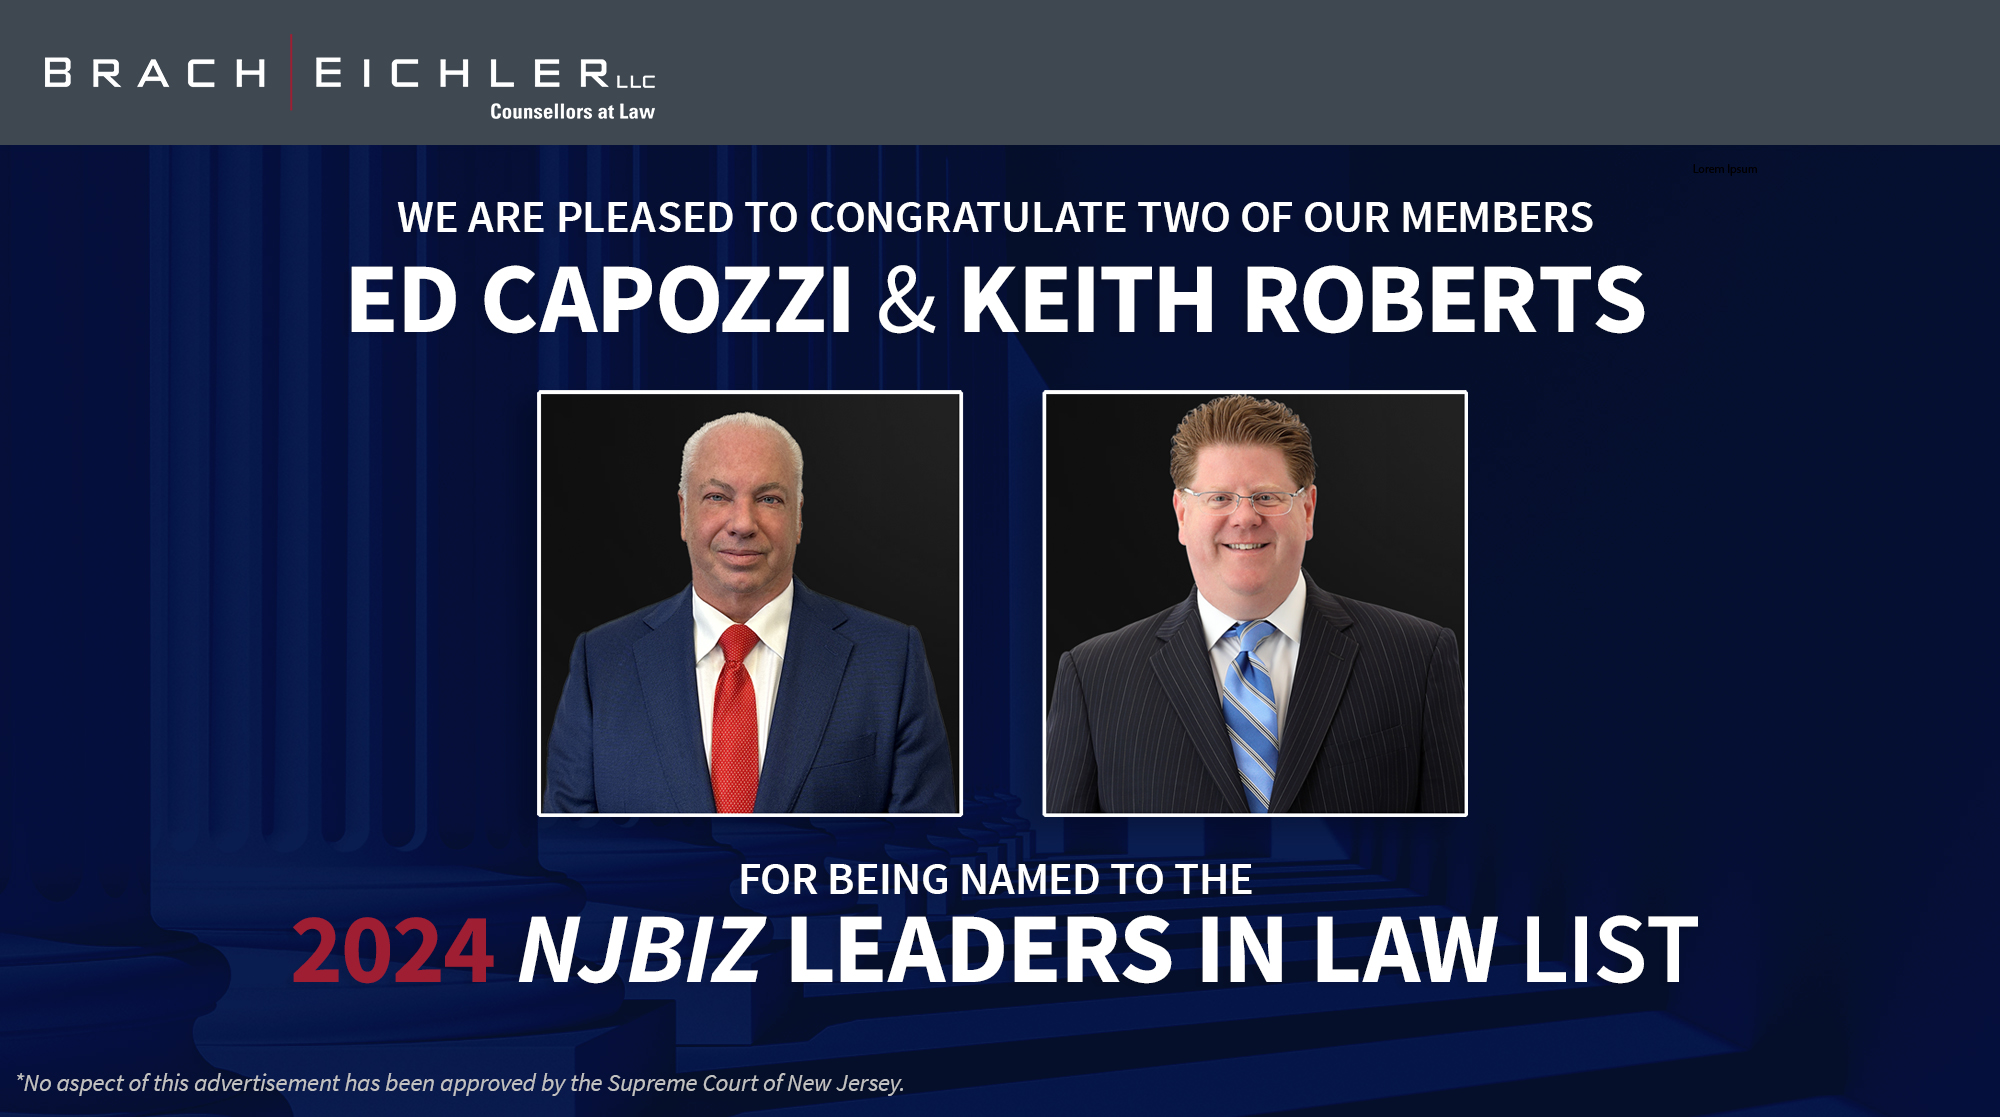 NJBIZ "Leaders In Law 2024" List - Brach Eichler